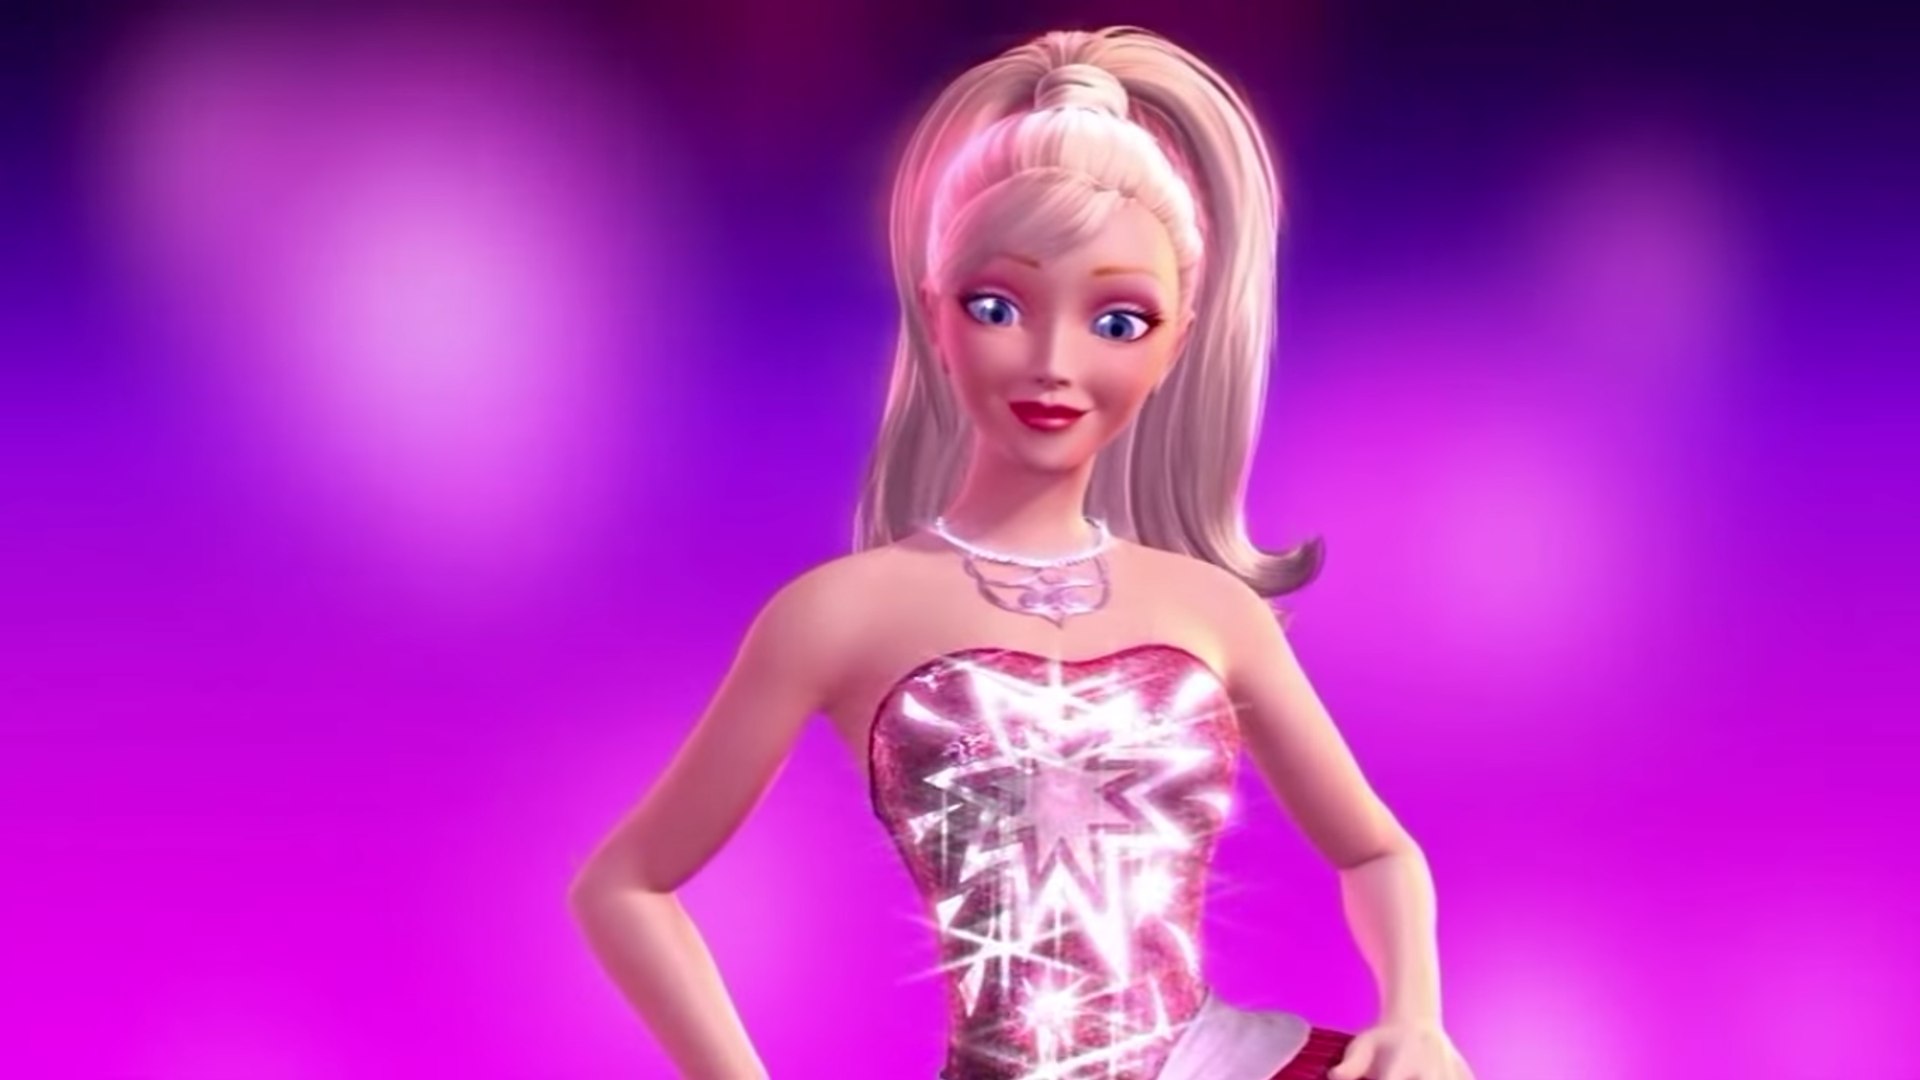 Barbie in A Mermaid Tale by Barbie In My Dream - Dailymotion